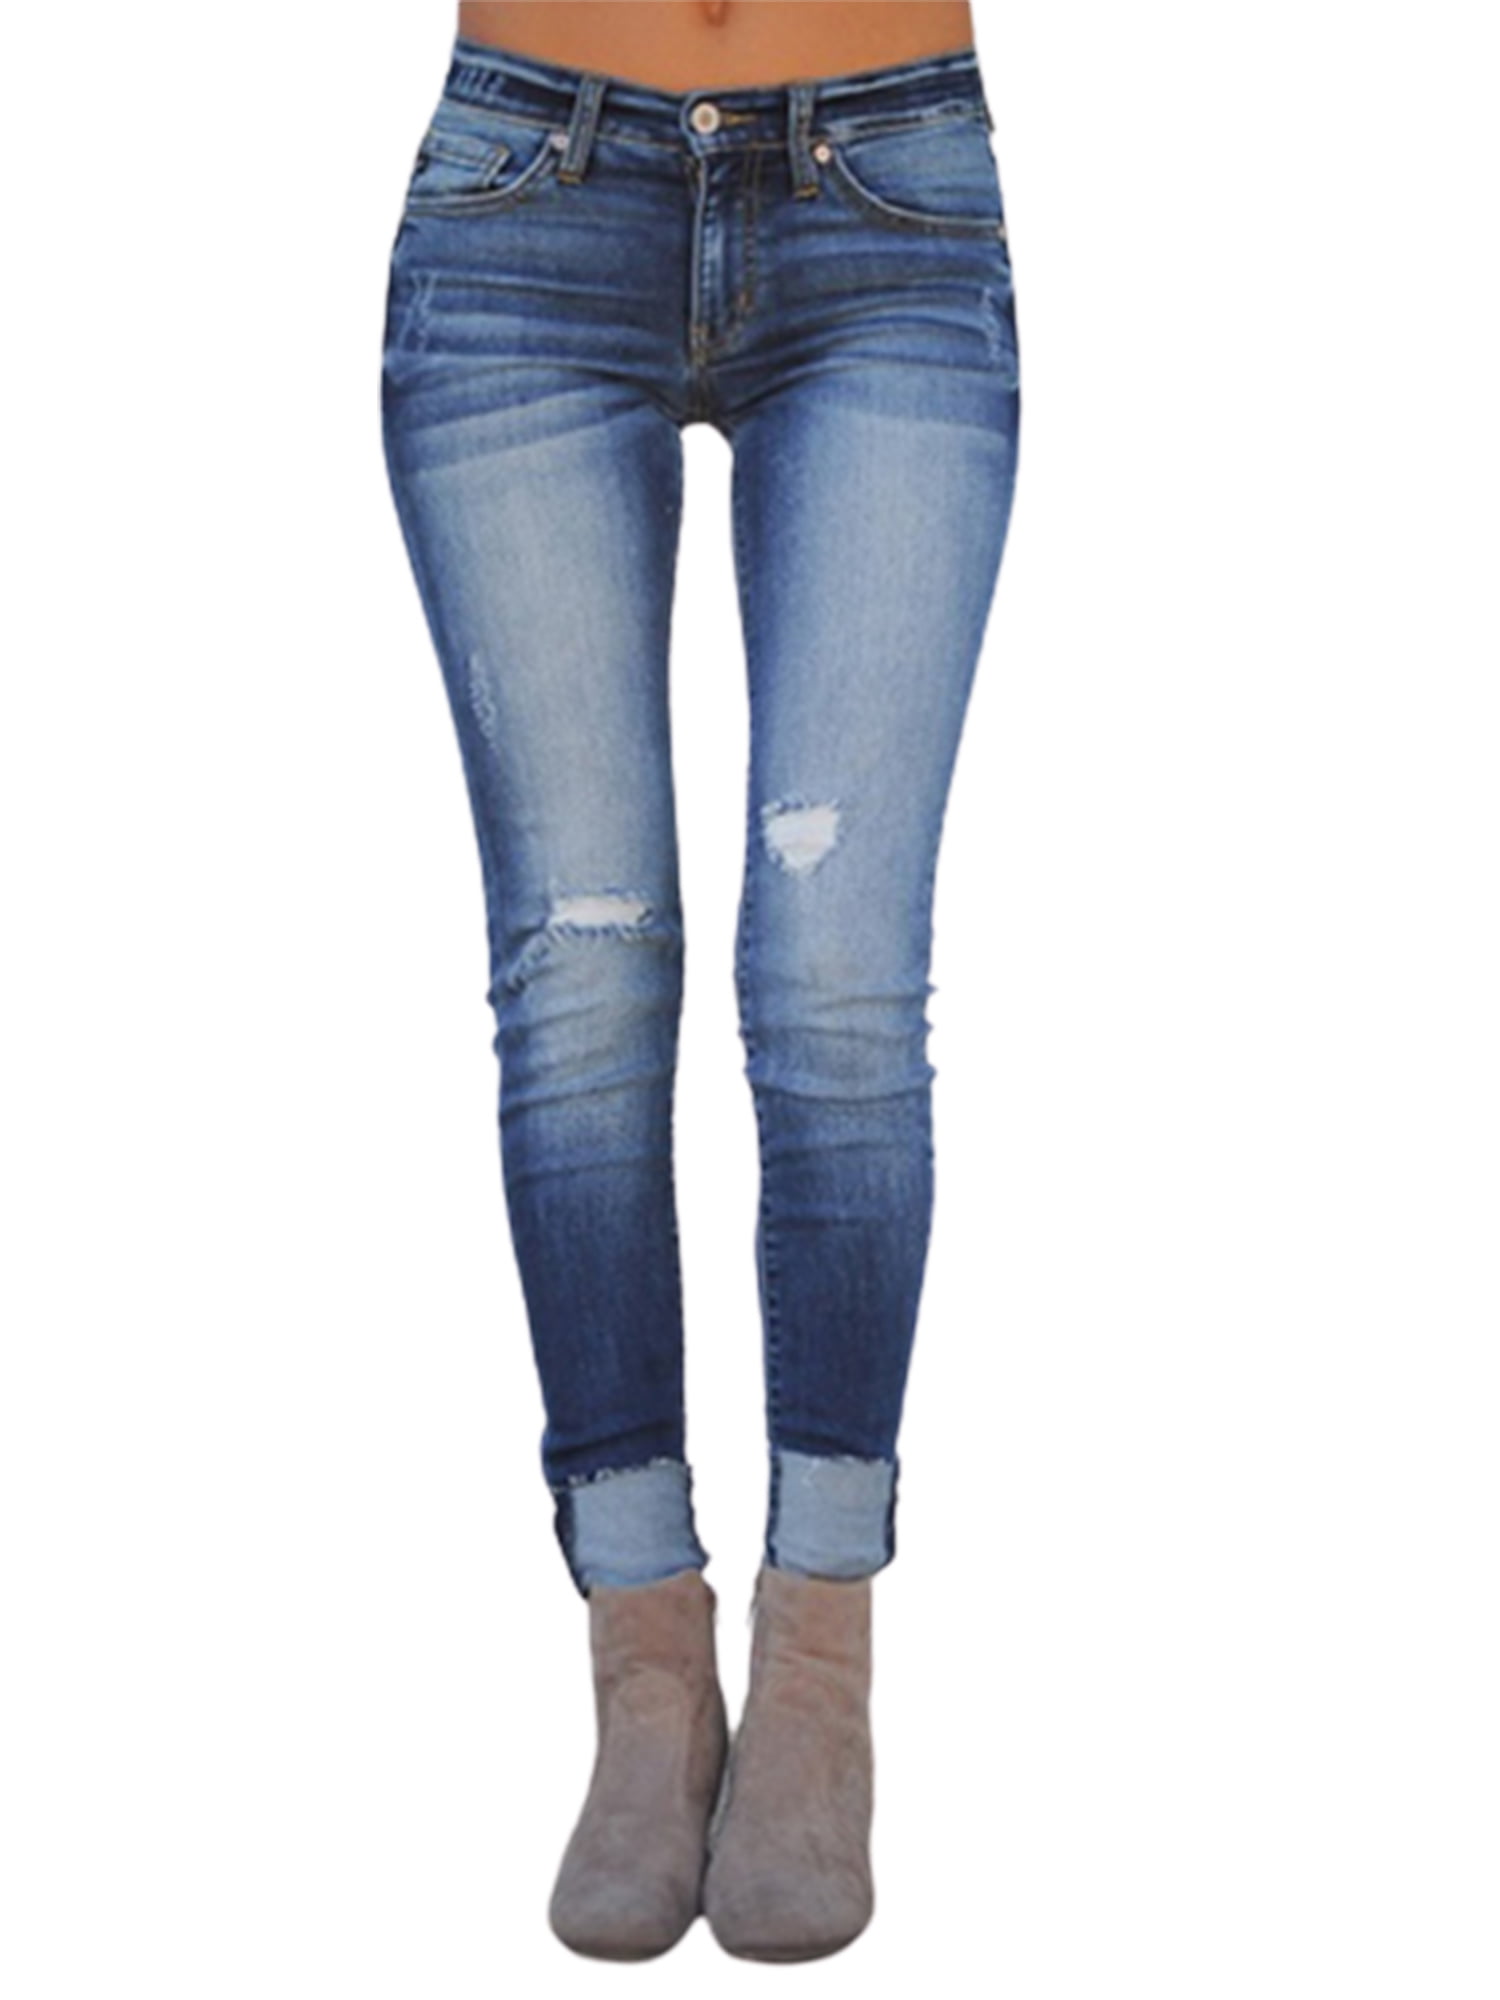 L-5XL Plus Size Women's Stretch Skinny Denim Jeans Slim Jeggings Pants Trousers